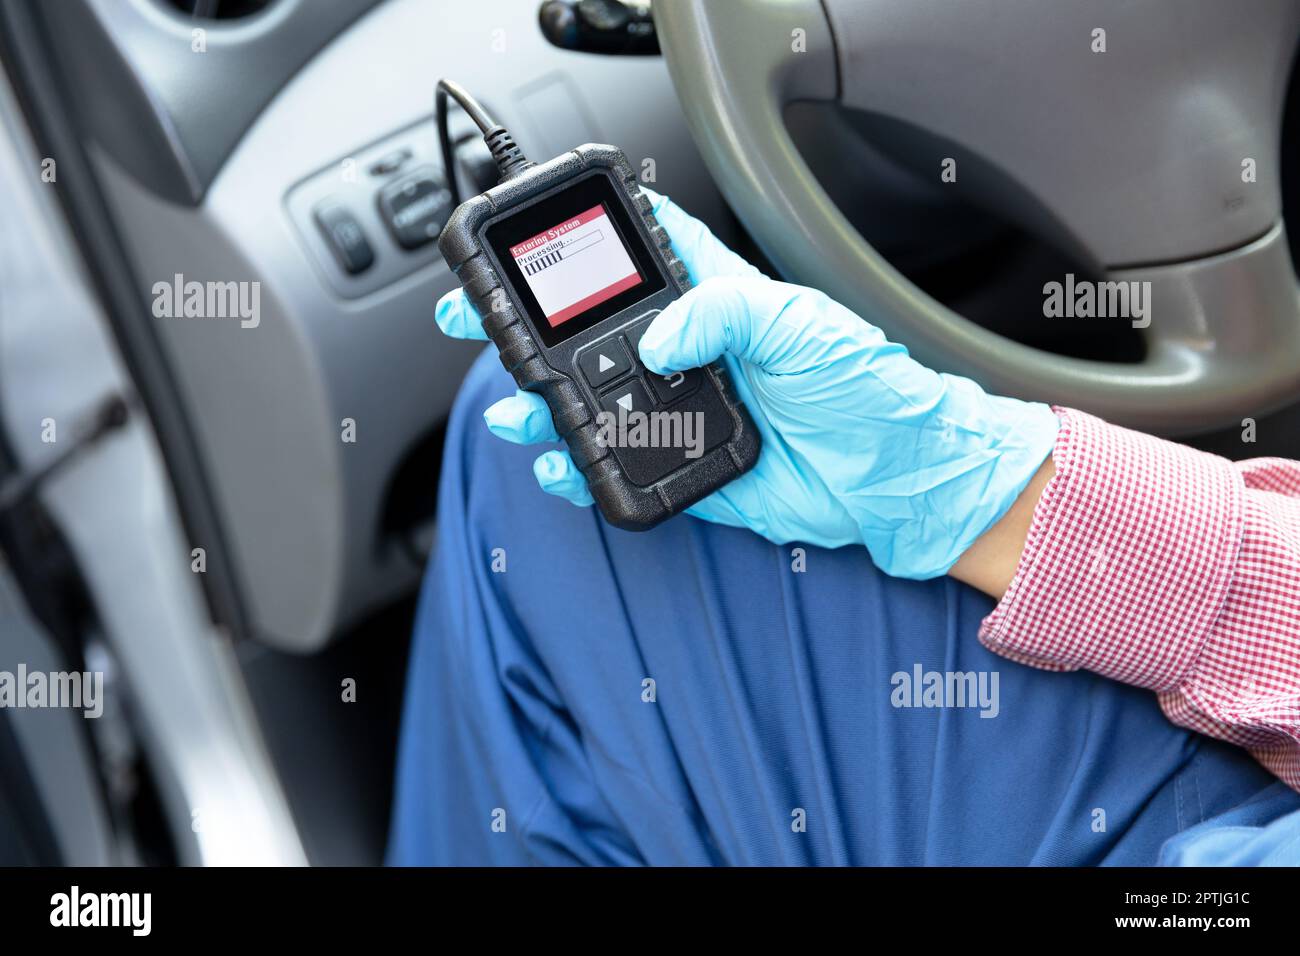 Escaner para diagnostico de carro Imágenes recortadas de stock - Alamy